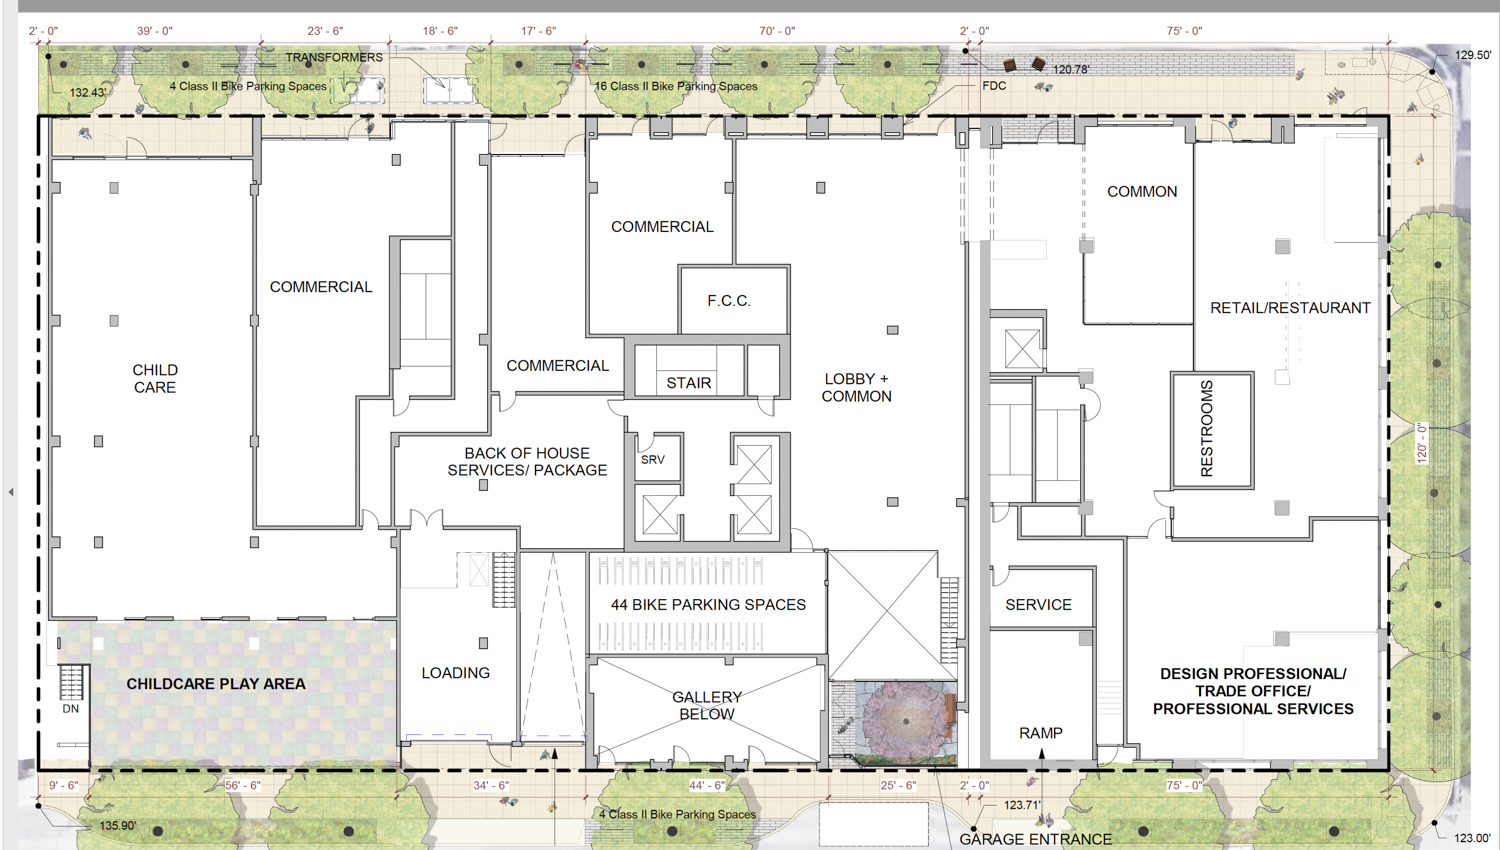 1101-1123 Sutter Street street-level floor plan, drawing by David Baker Architects